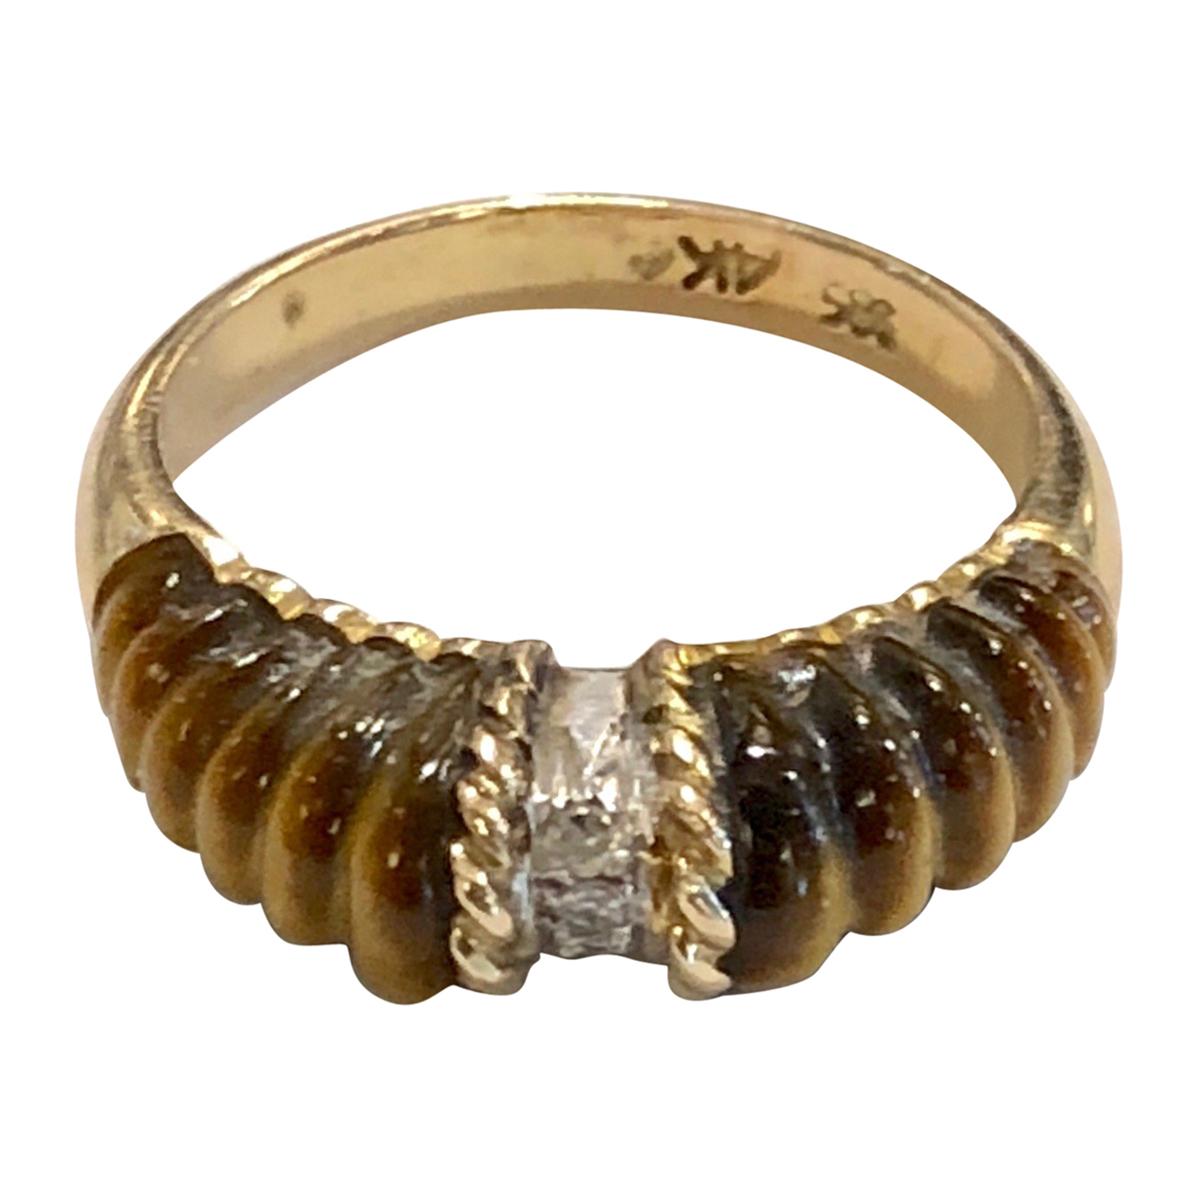 Carved Tigers Eye with Diamond Inset Ring, 14 Karat Gold, circa 1970s